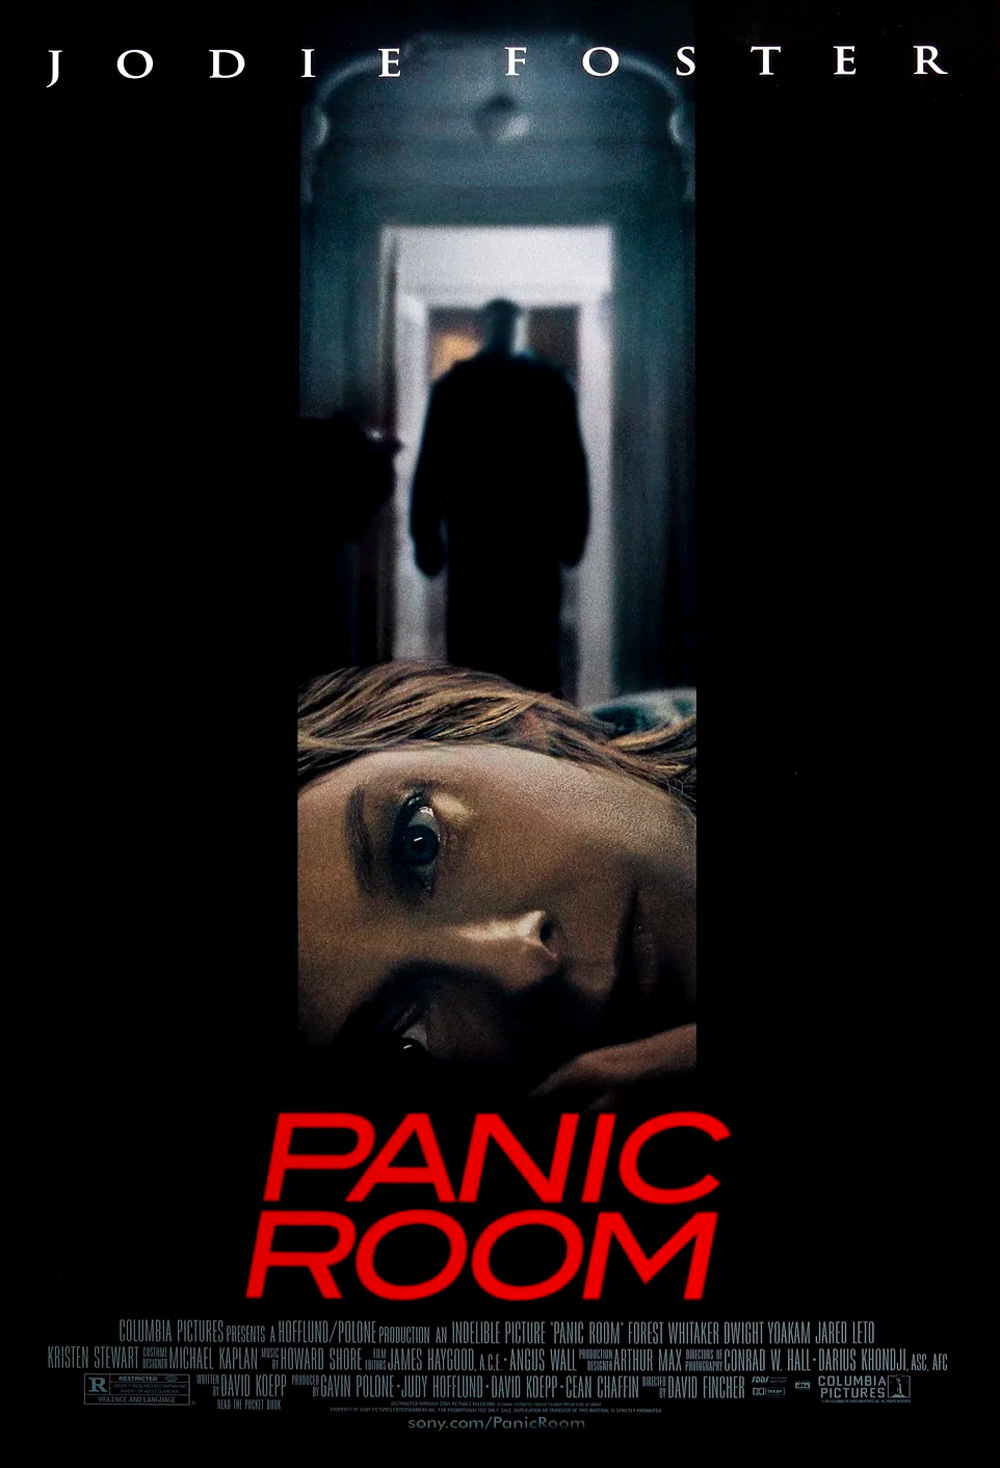 Fincher Panic Room